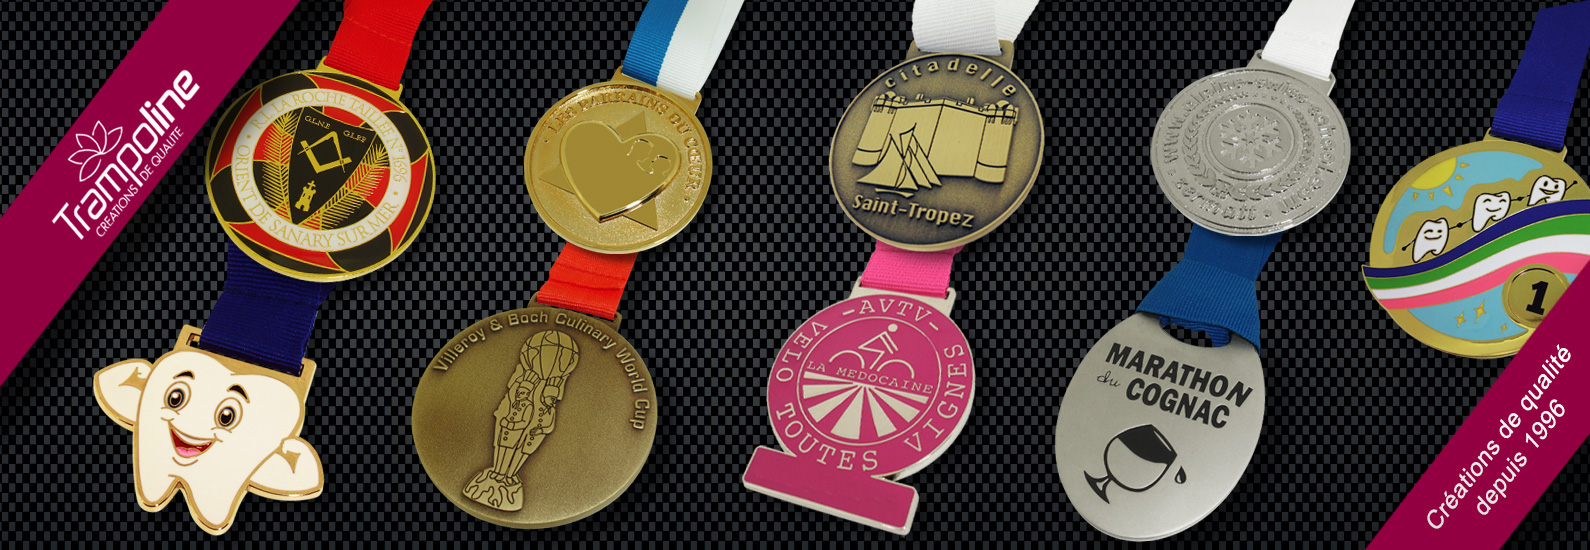 3 realisation medaille sportive ceremonie fabricant medaille ruban tissu tour de cou challenge course